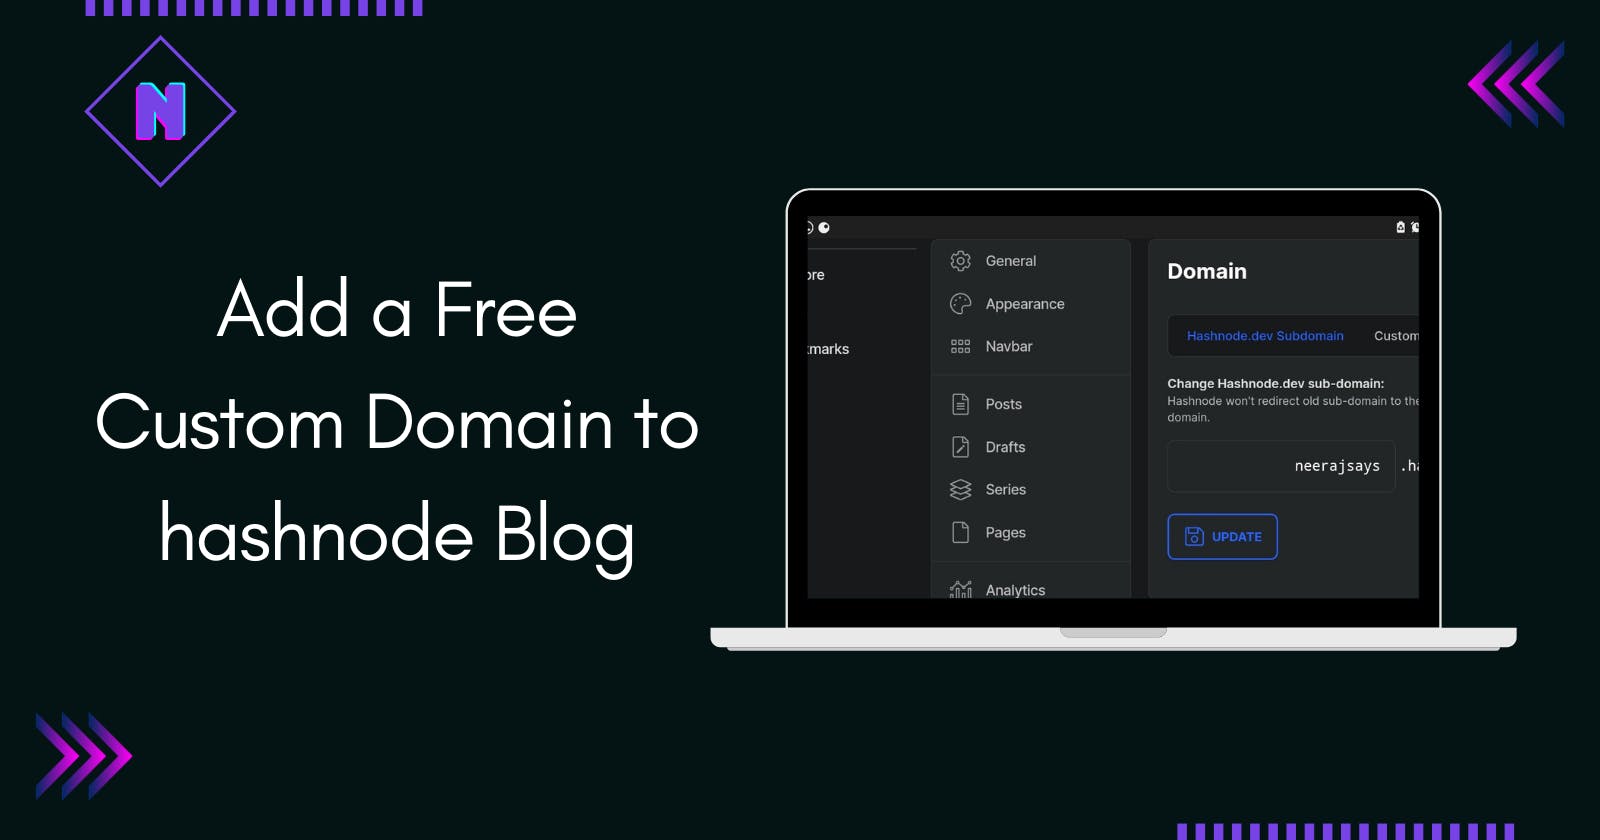 Add a Free Custom Domain to hashnode Blog